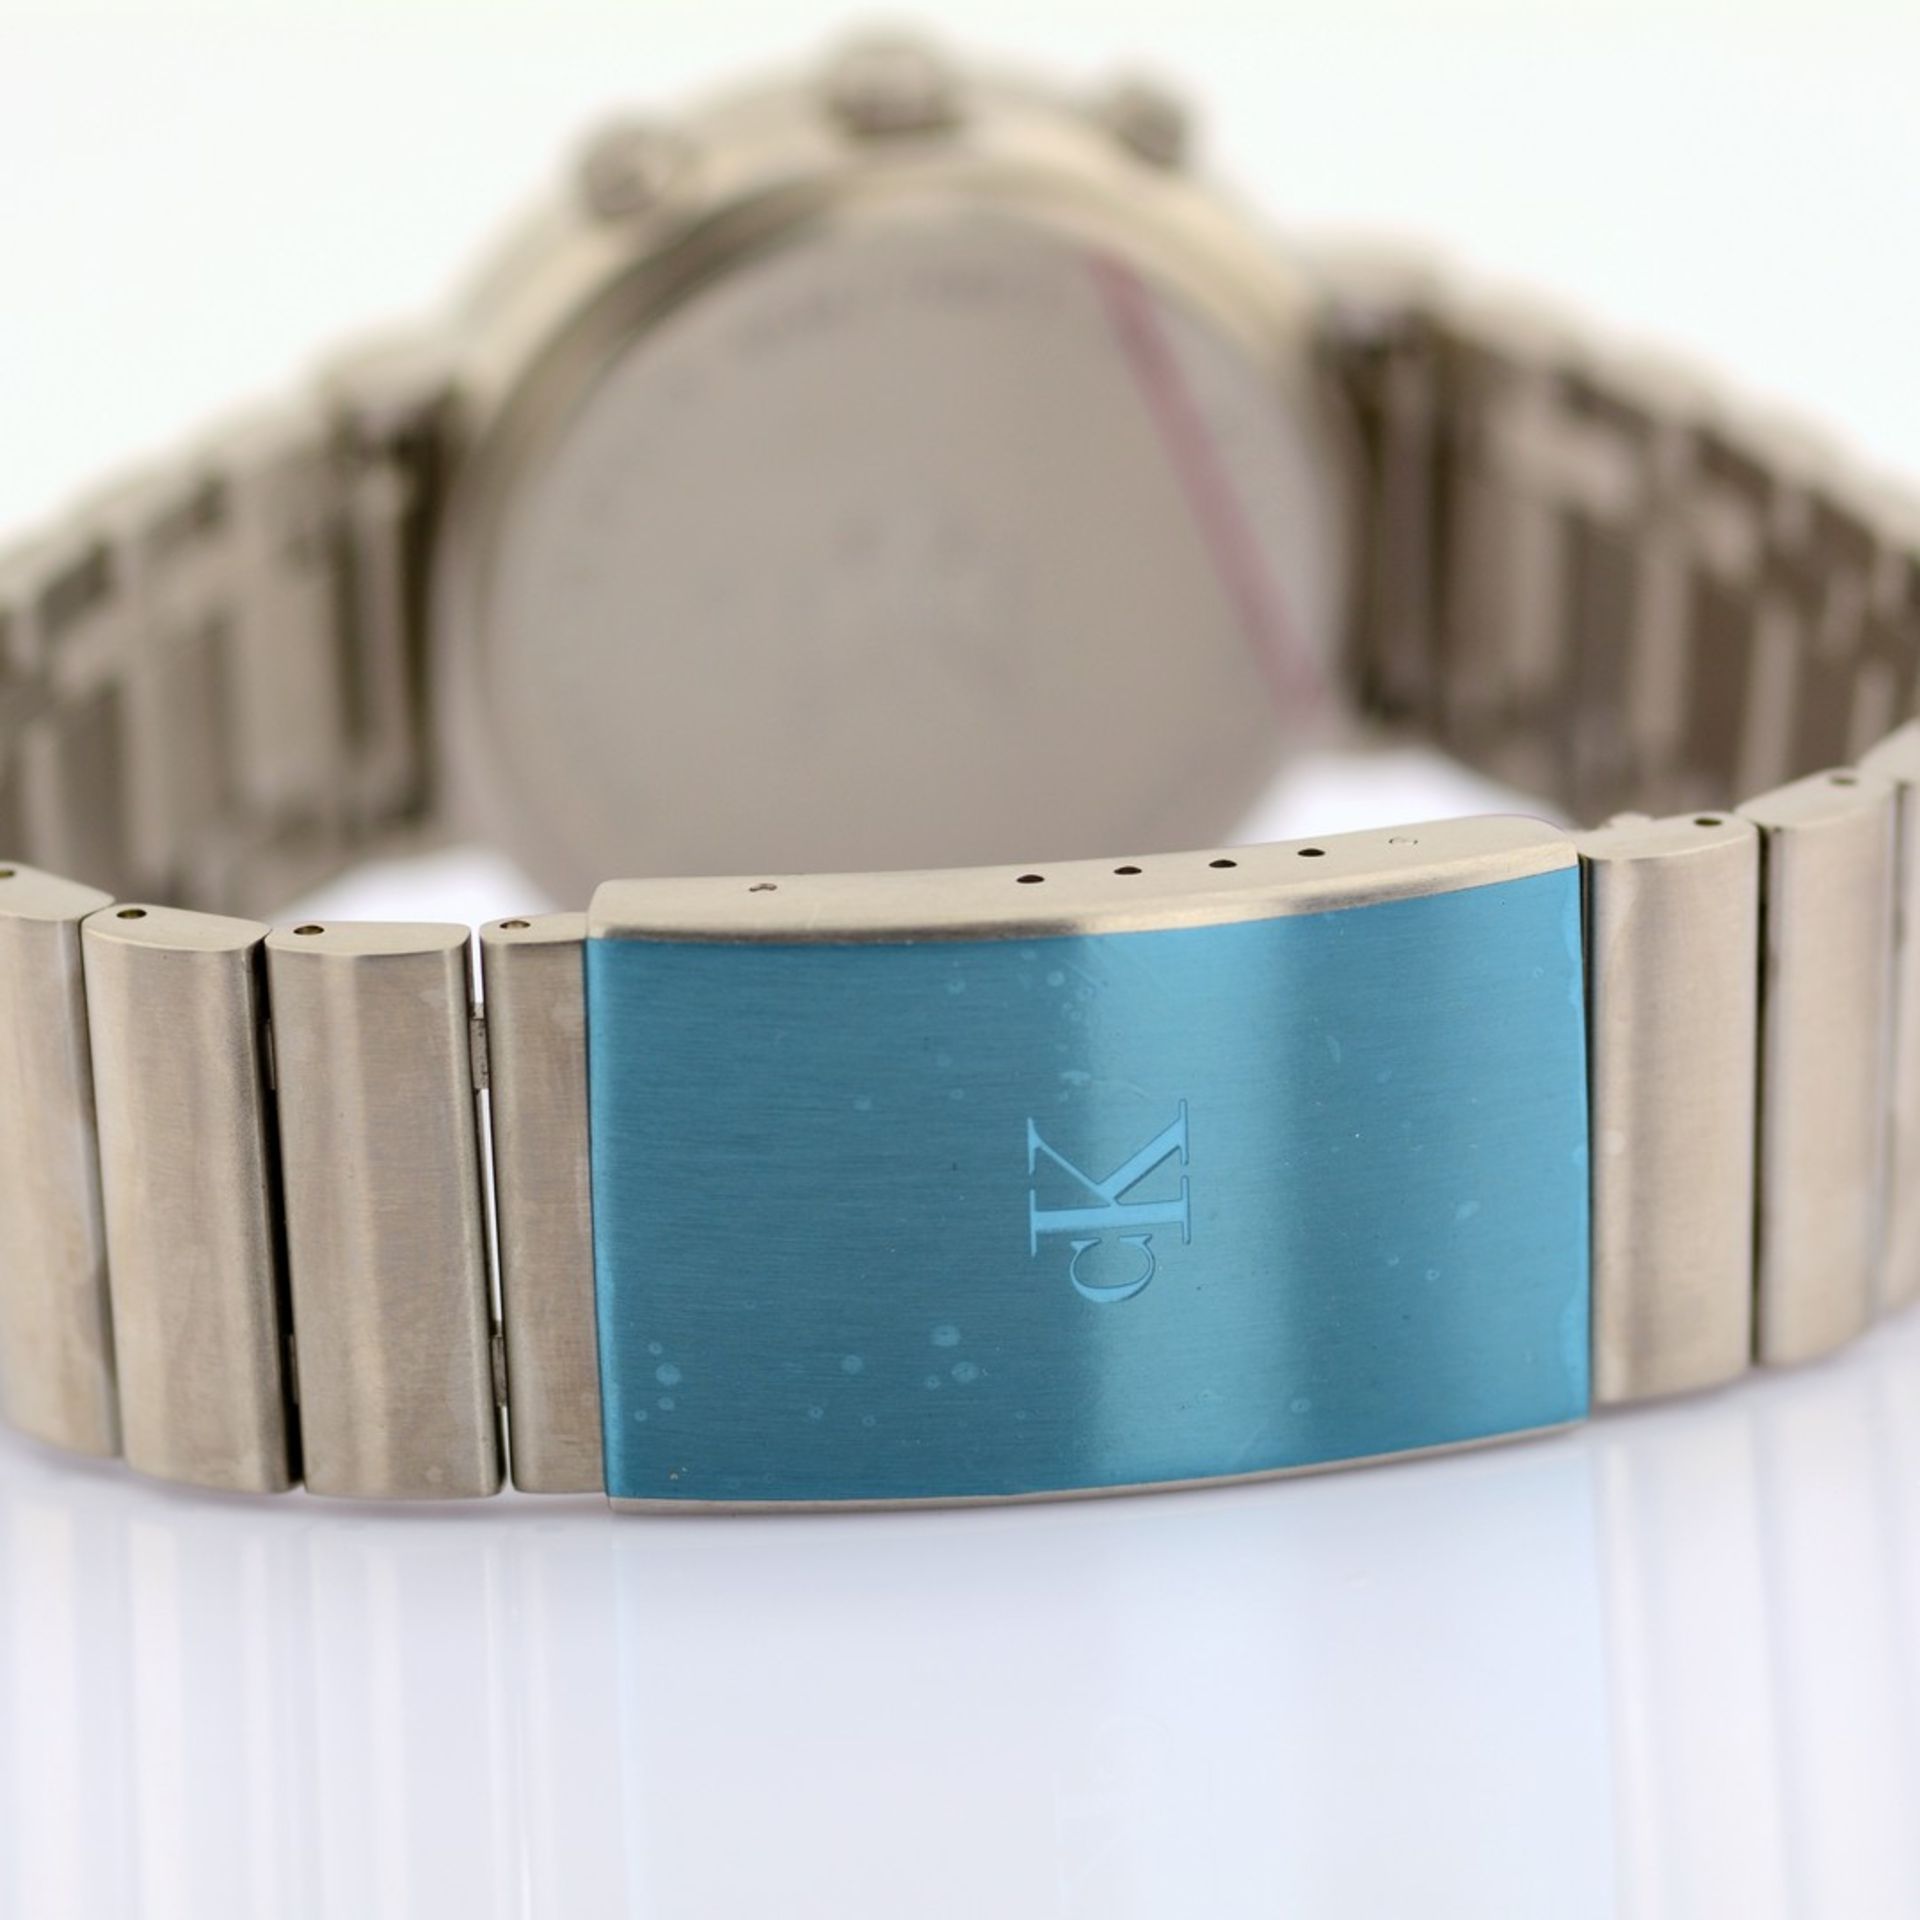 Calvin Klein / Chronograph - Gentlemen's Steel Wristwatch - Image 7 of 8